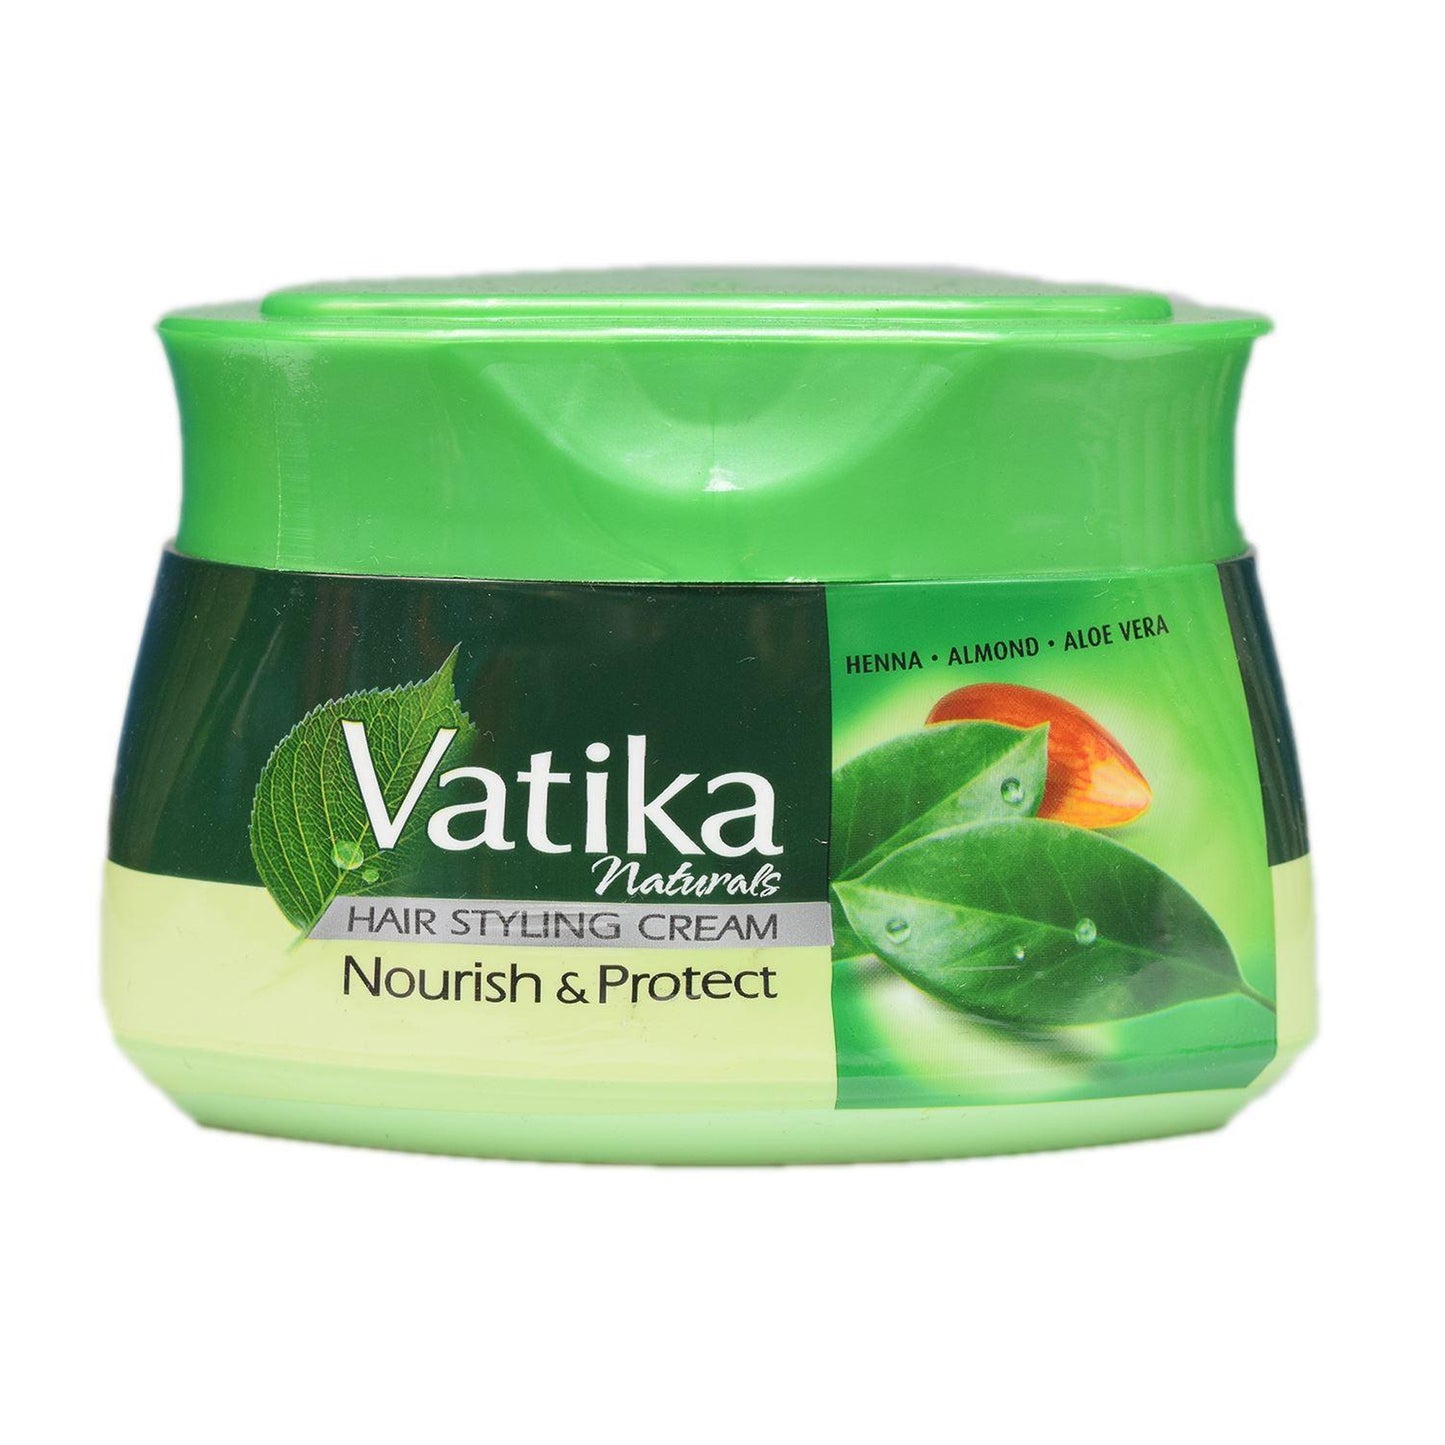 VATIKA - NOURISH & PROTECT STYLING HAIR CREAM WITH HENNA, ALMOND & ALOE VERA - 140ML